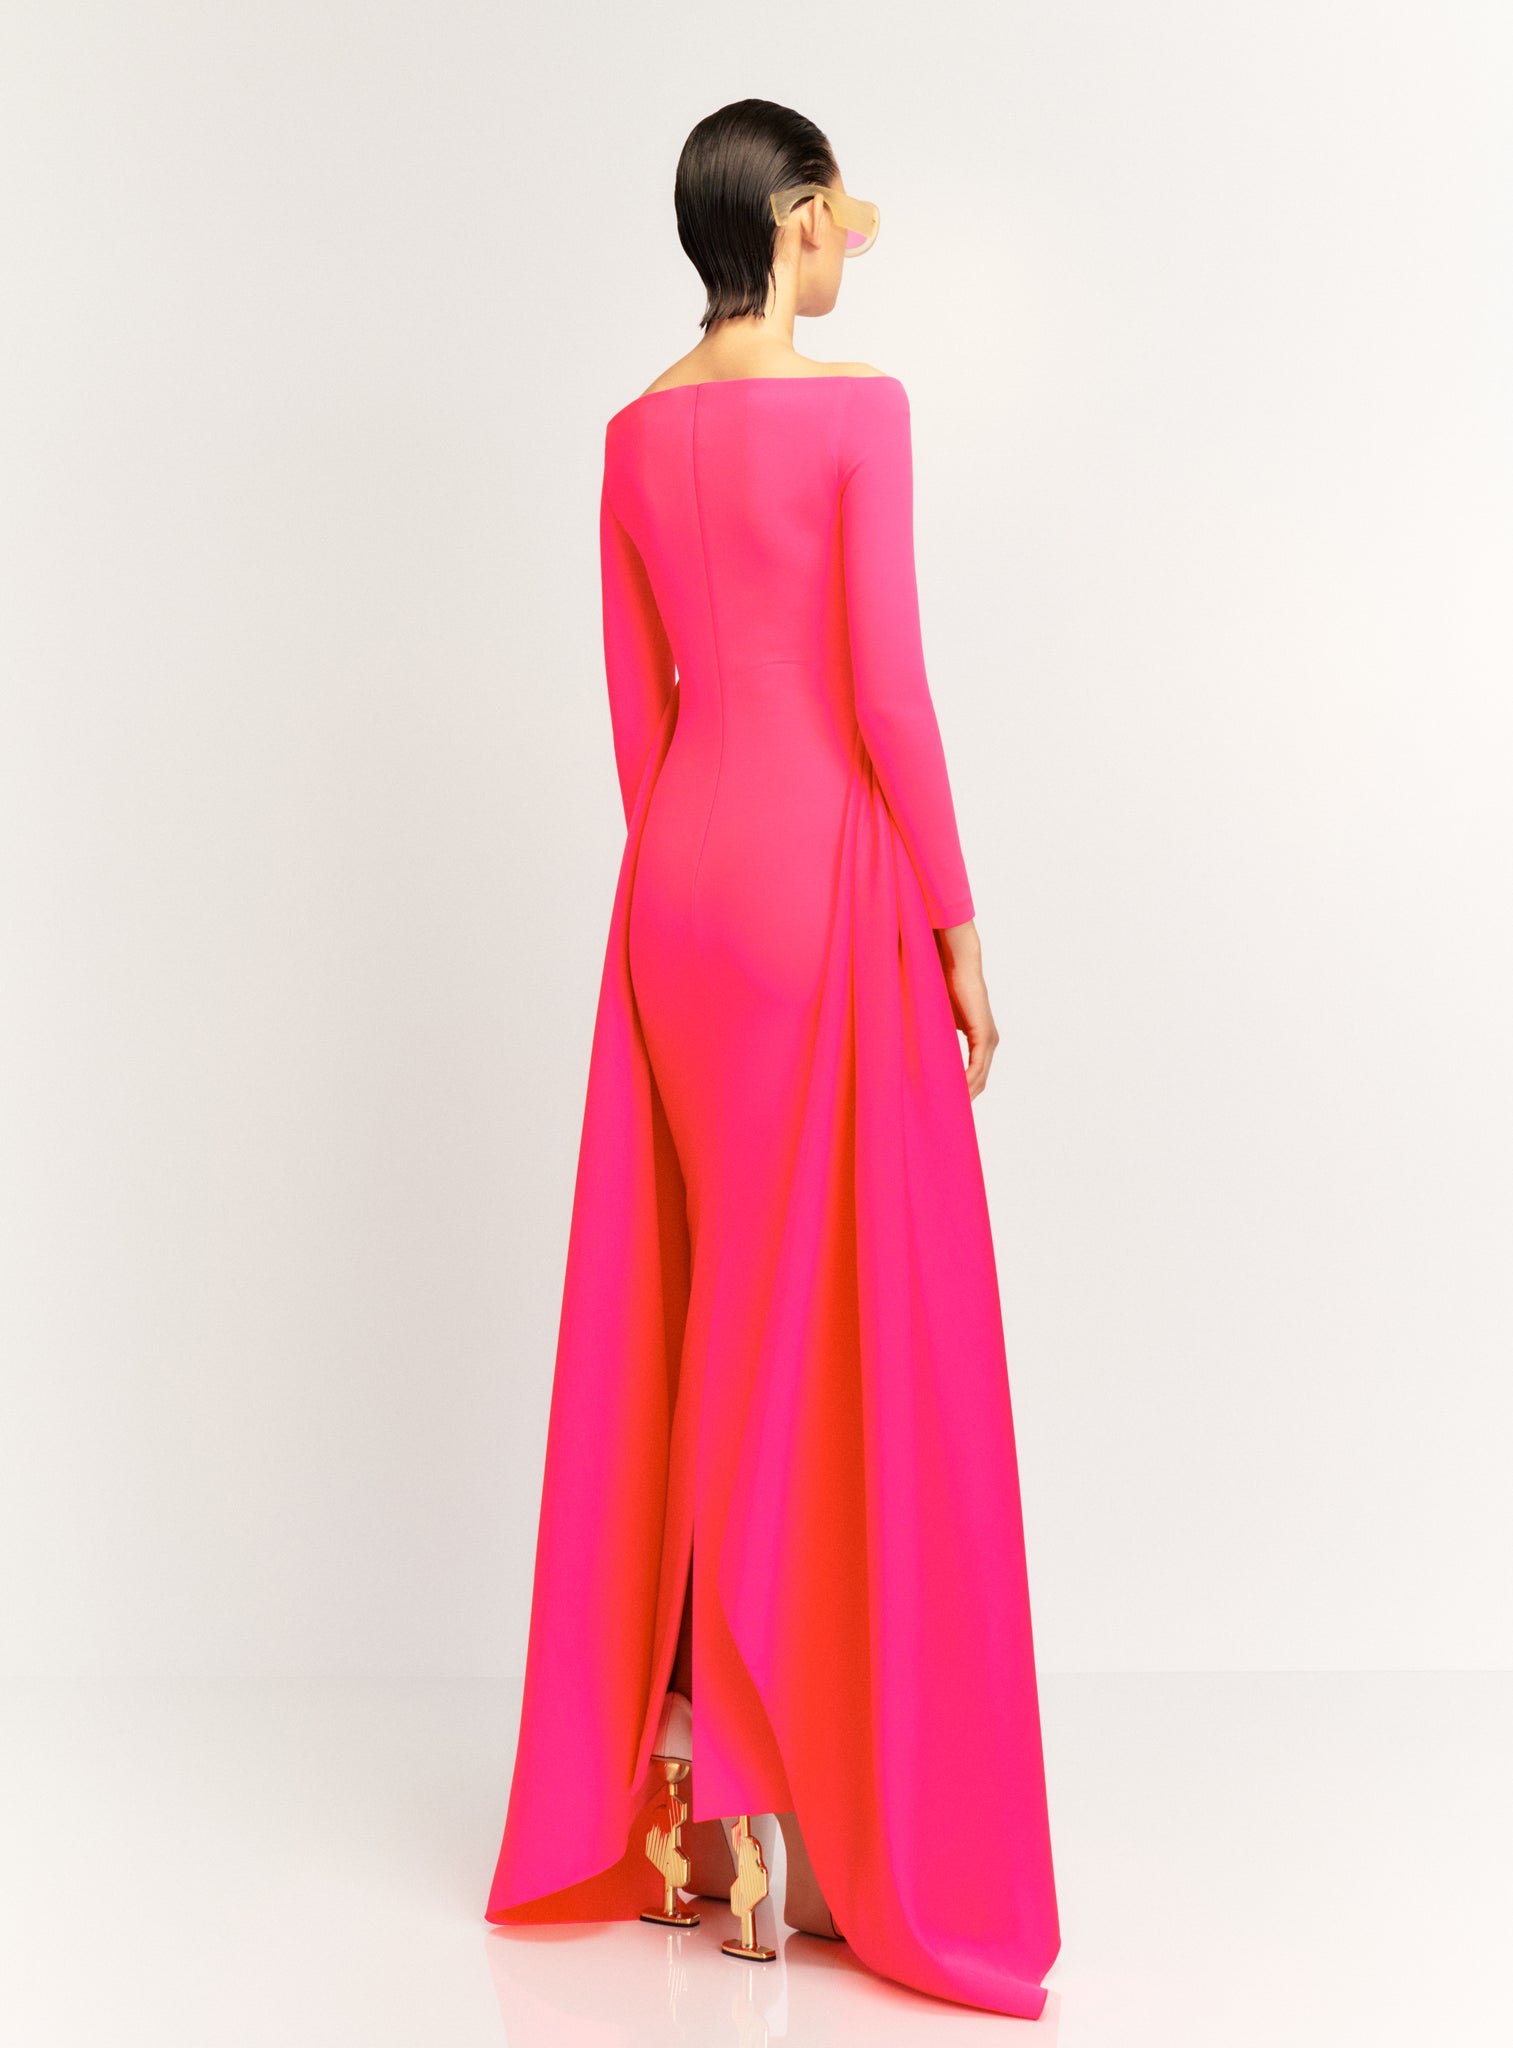 The Irma Maxi Dress in Ultra Pink